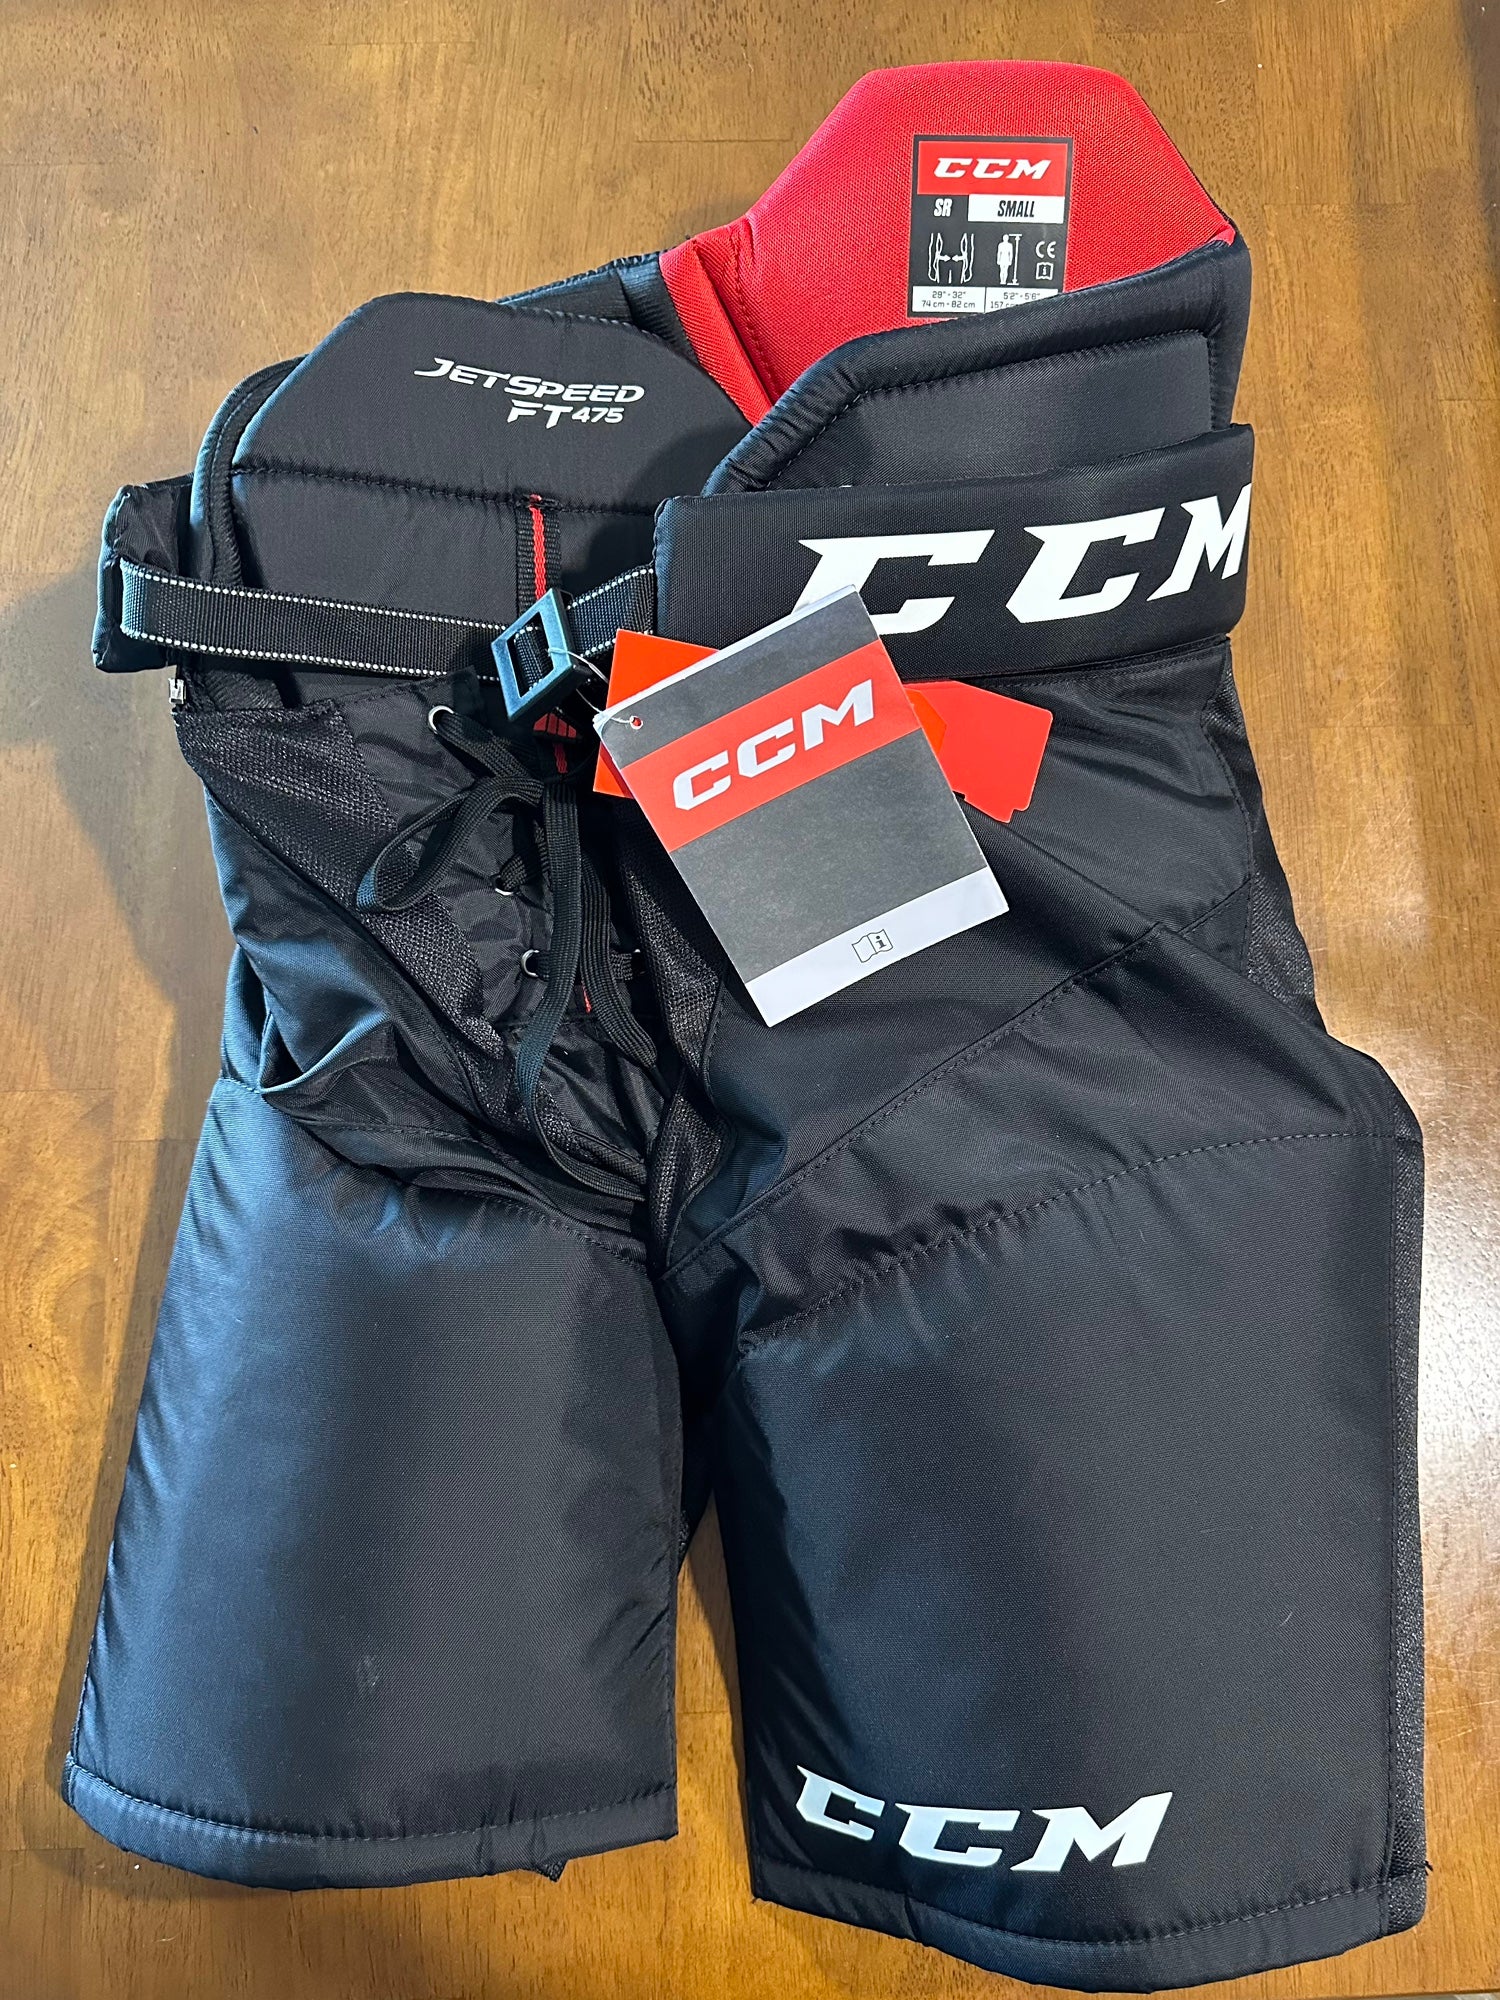 New CCM JETSPEED FT475 HOCKEY PANTS JUNIOR MEDIUM BLACK Ice Hockey / Pants